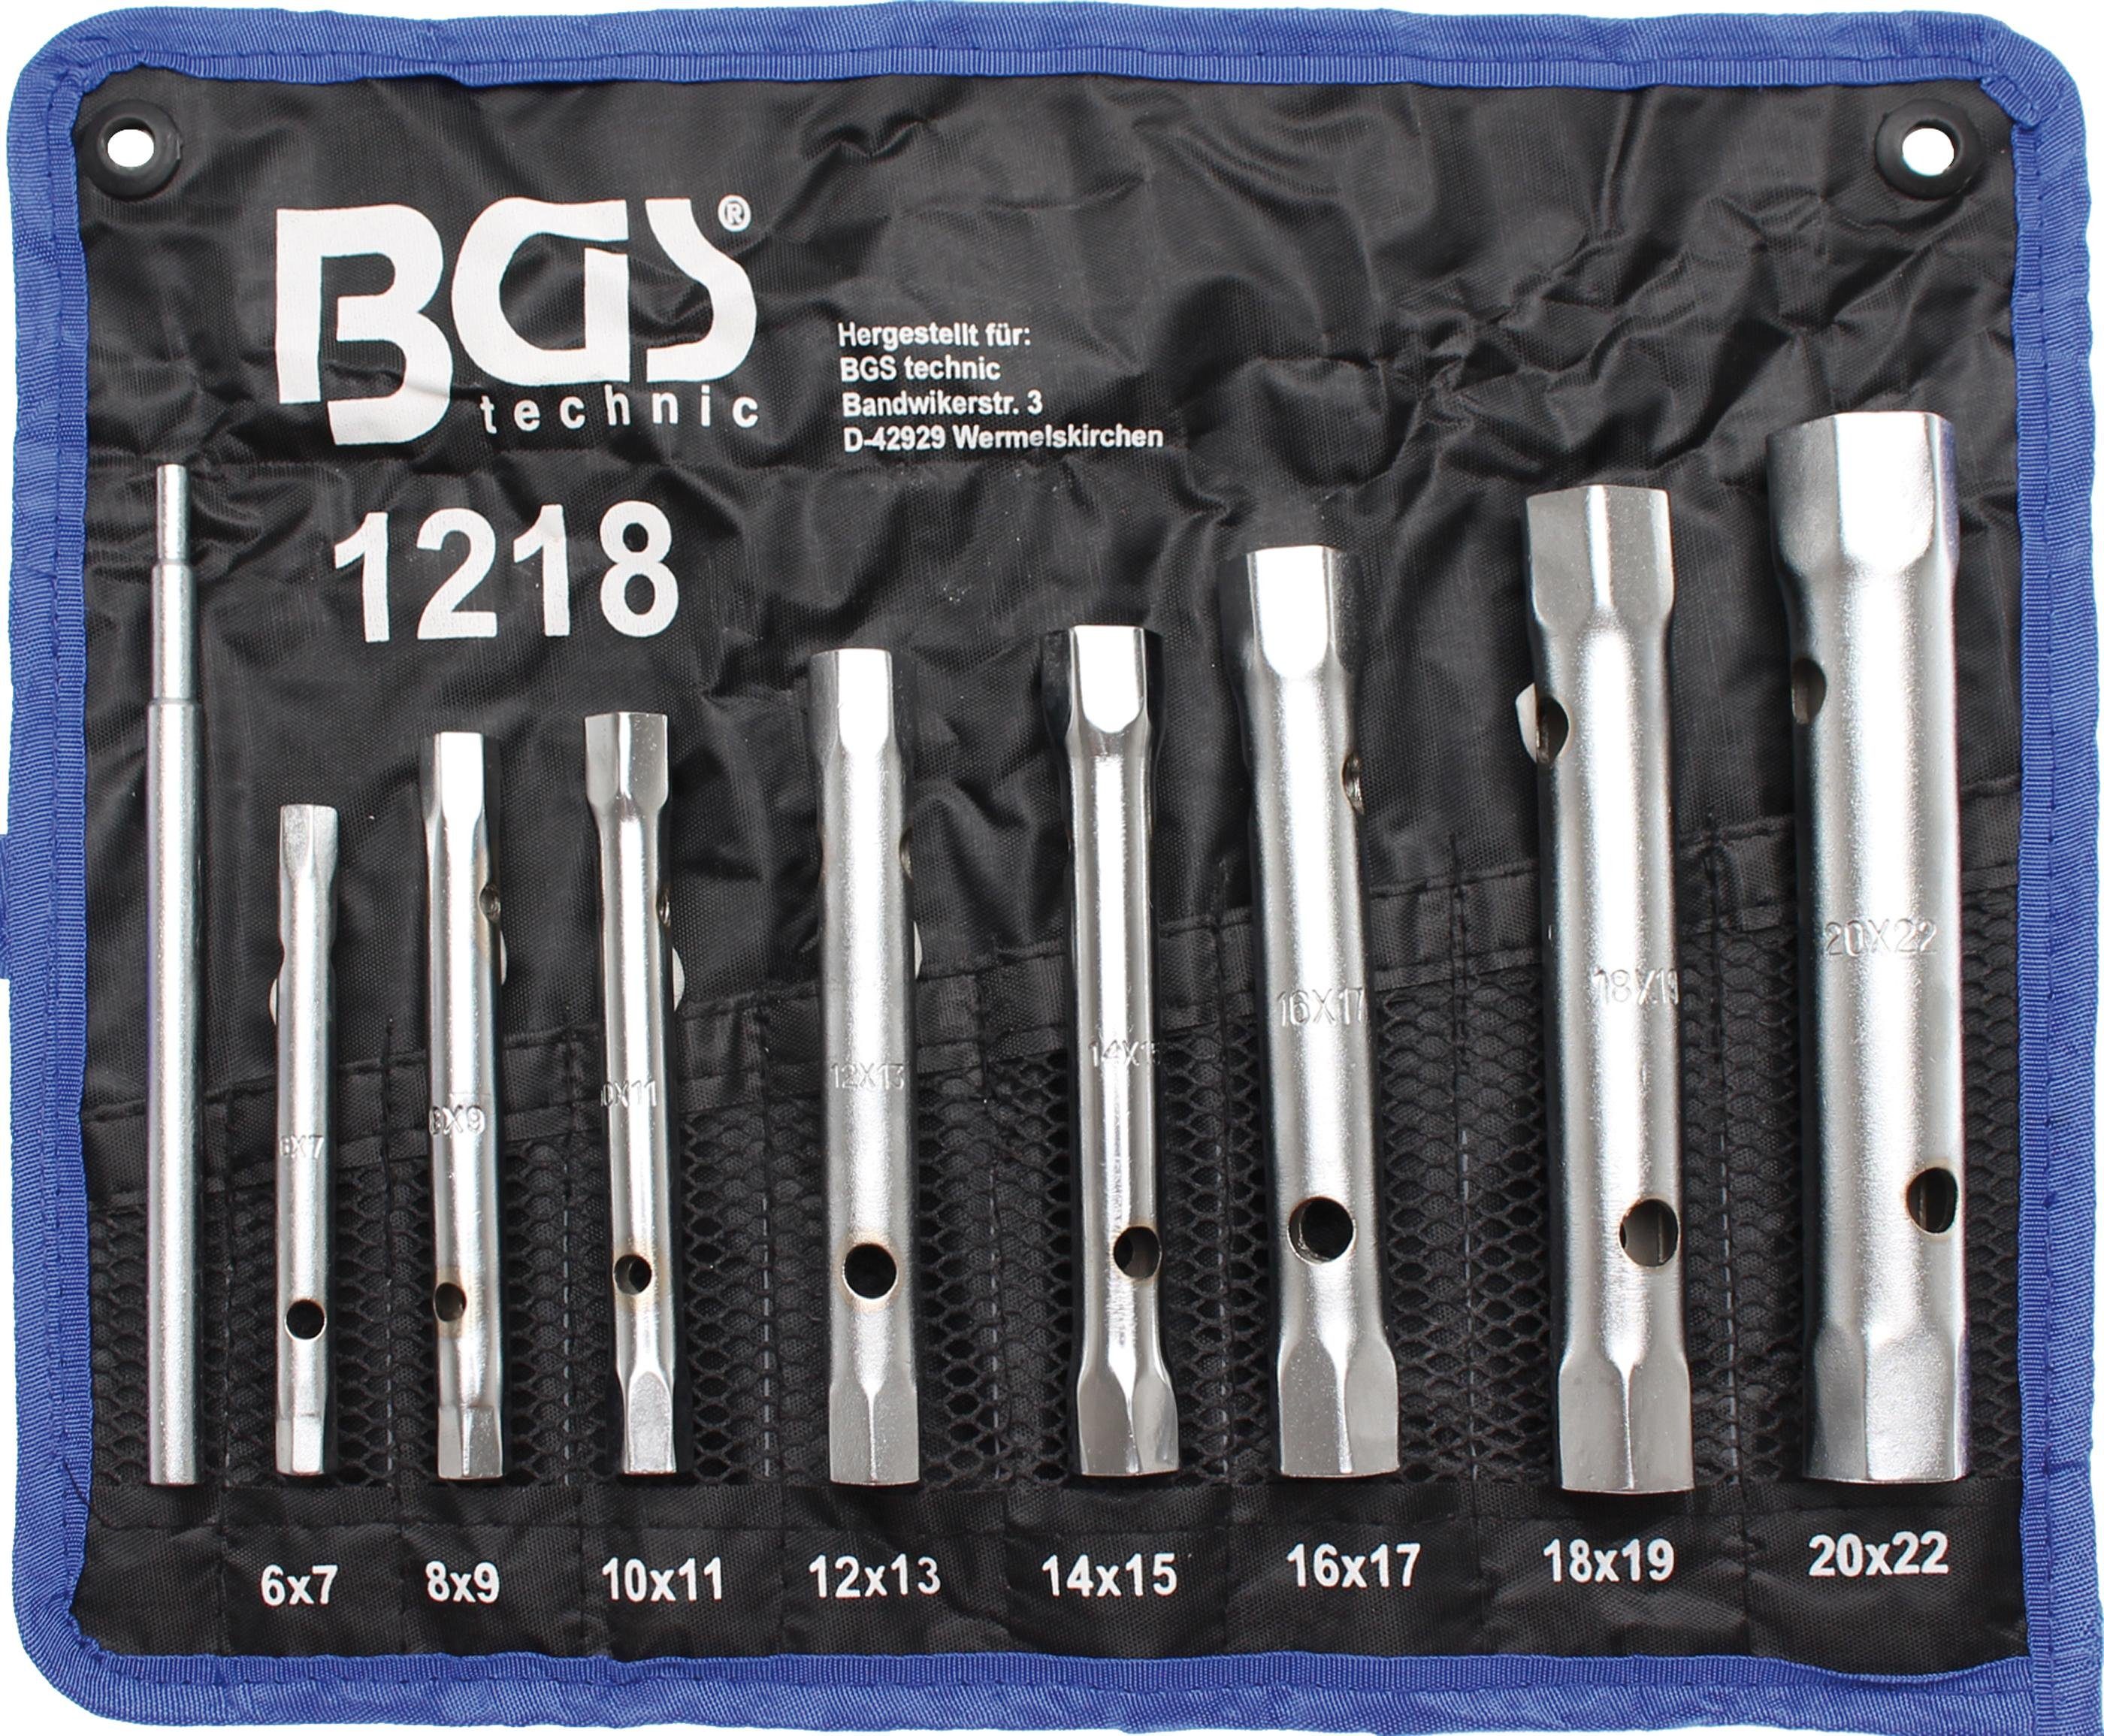 BGS technic Ratsche Rohrsteckschlüssel-Satz, SW 6 x 7 - 20 x 22 mm, 9-tlg. | Ratschen